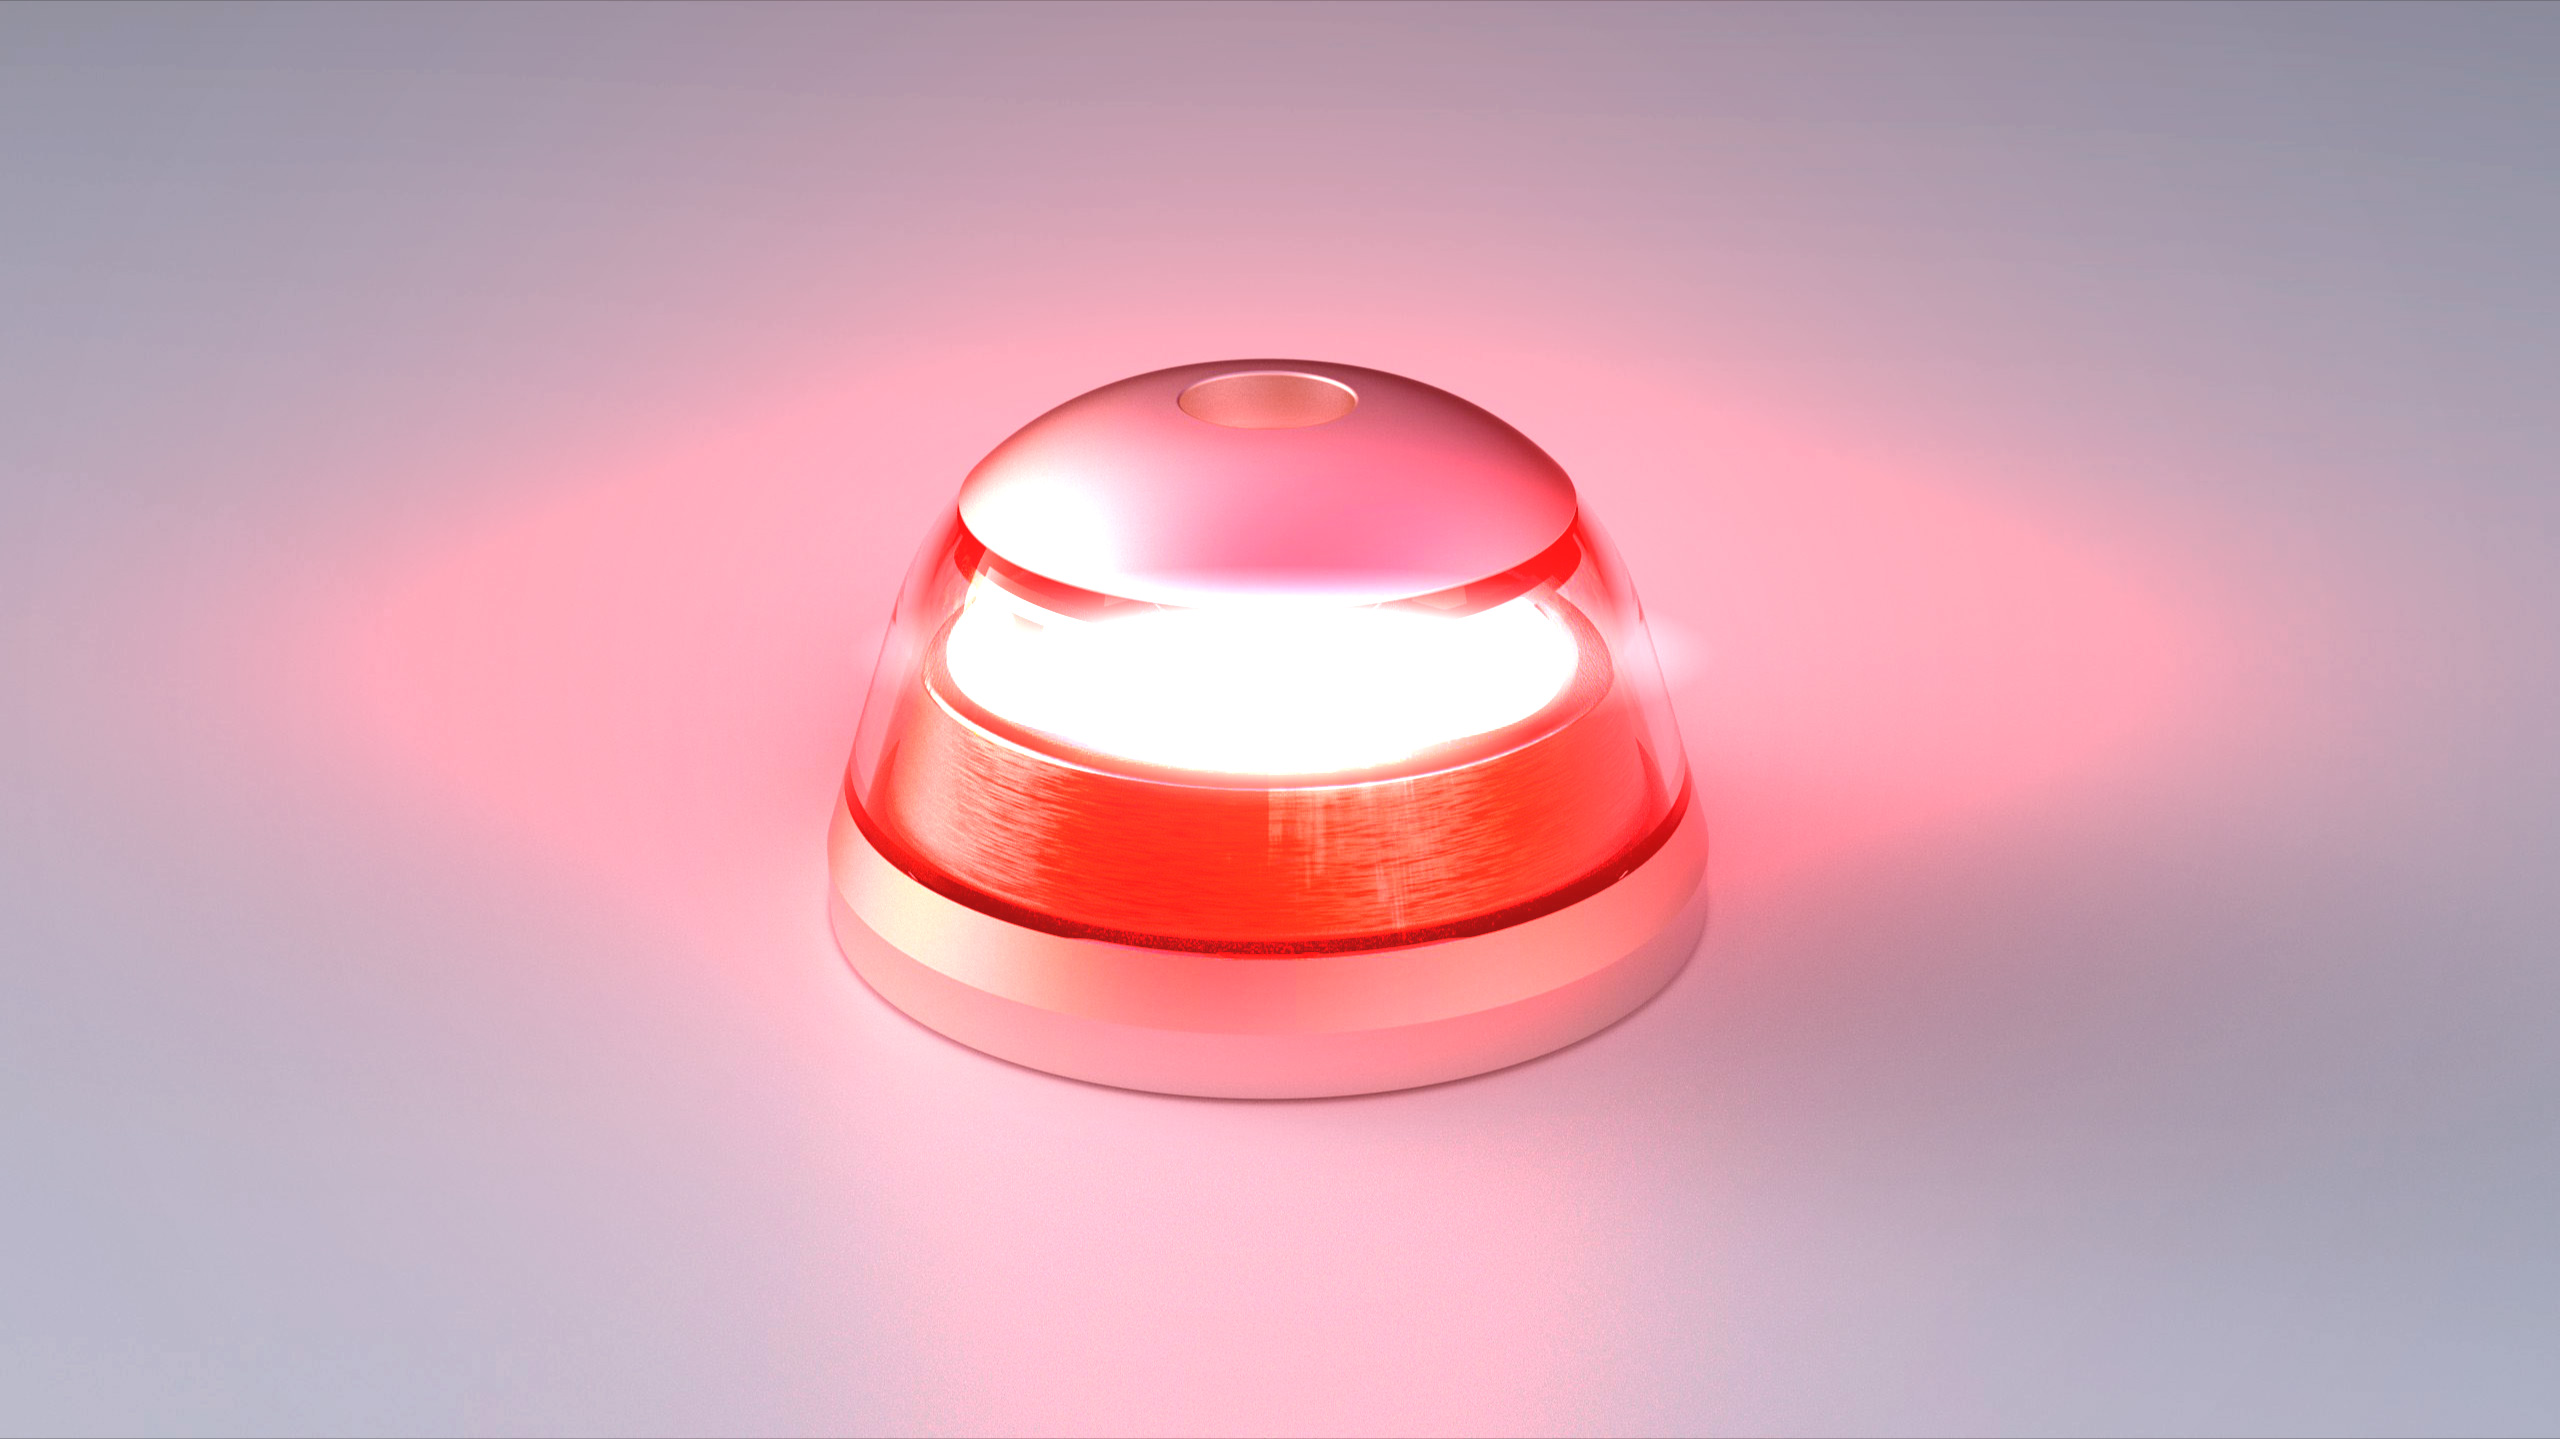 RedBaron Mini NXT Anti-collision LED light